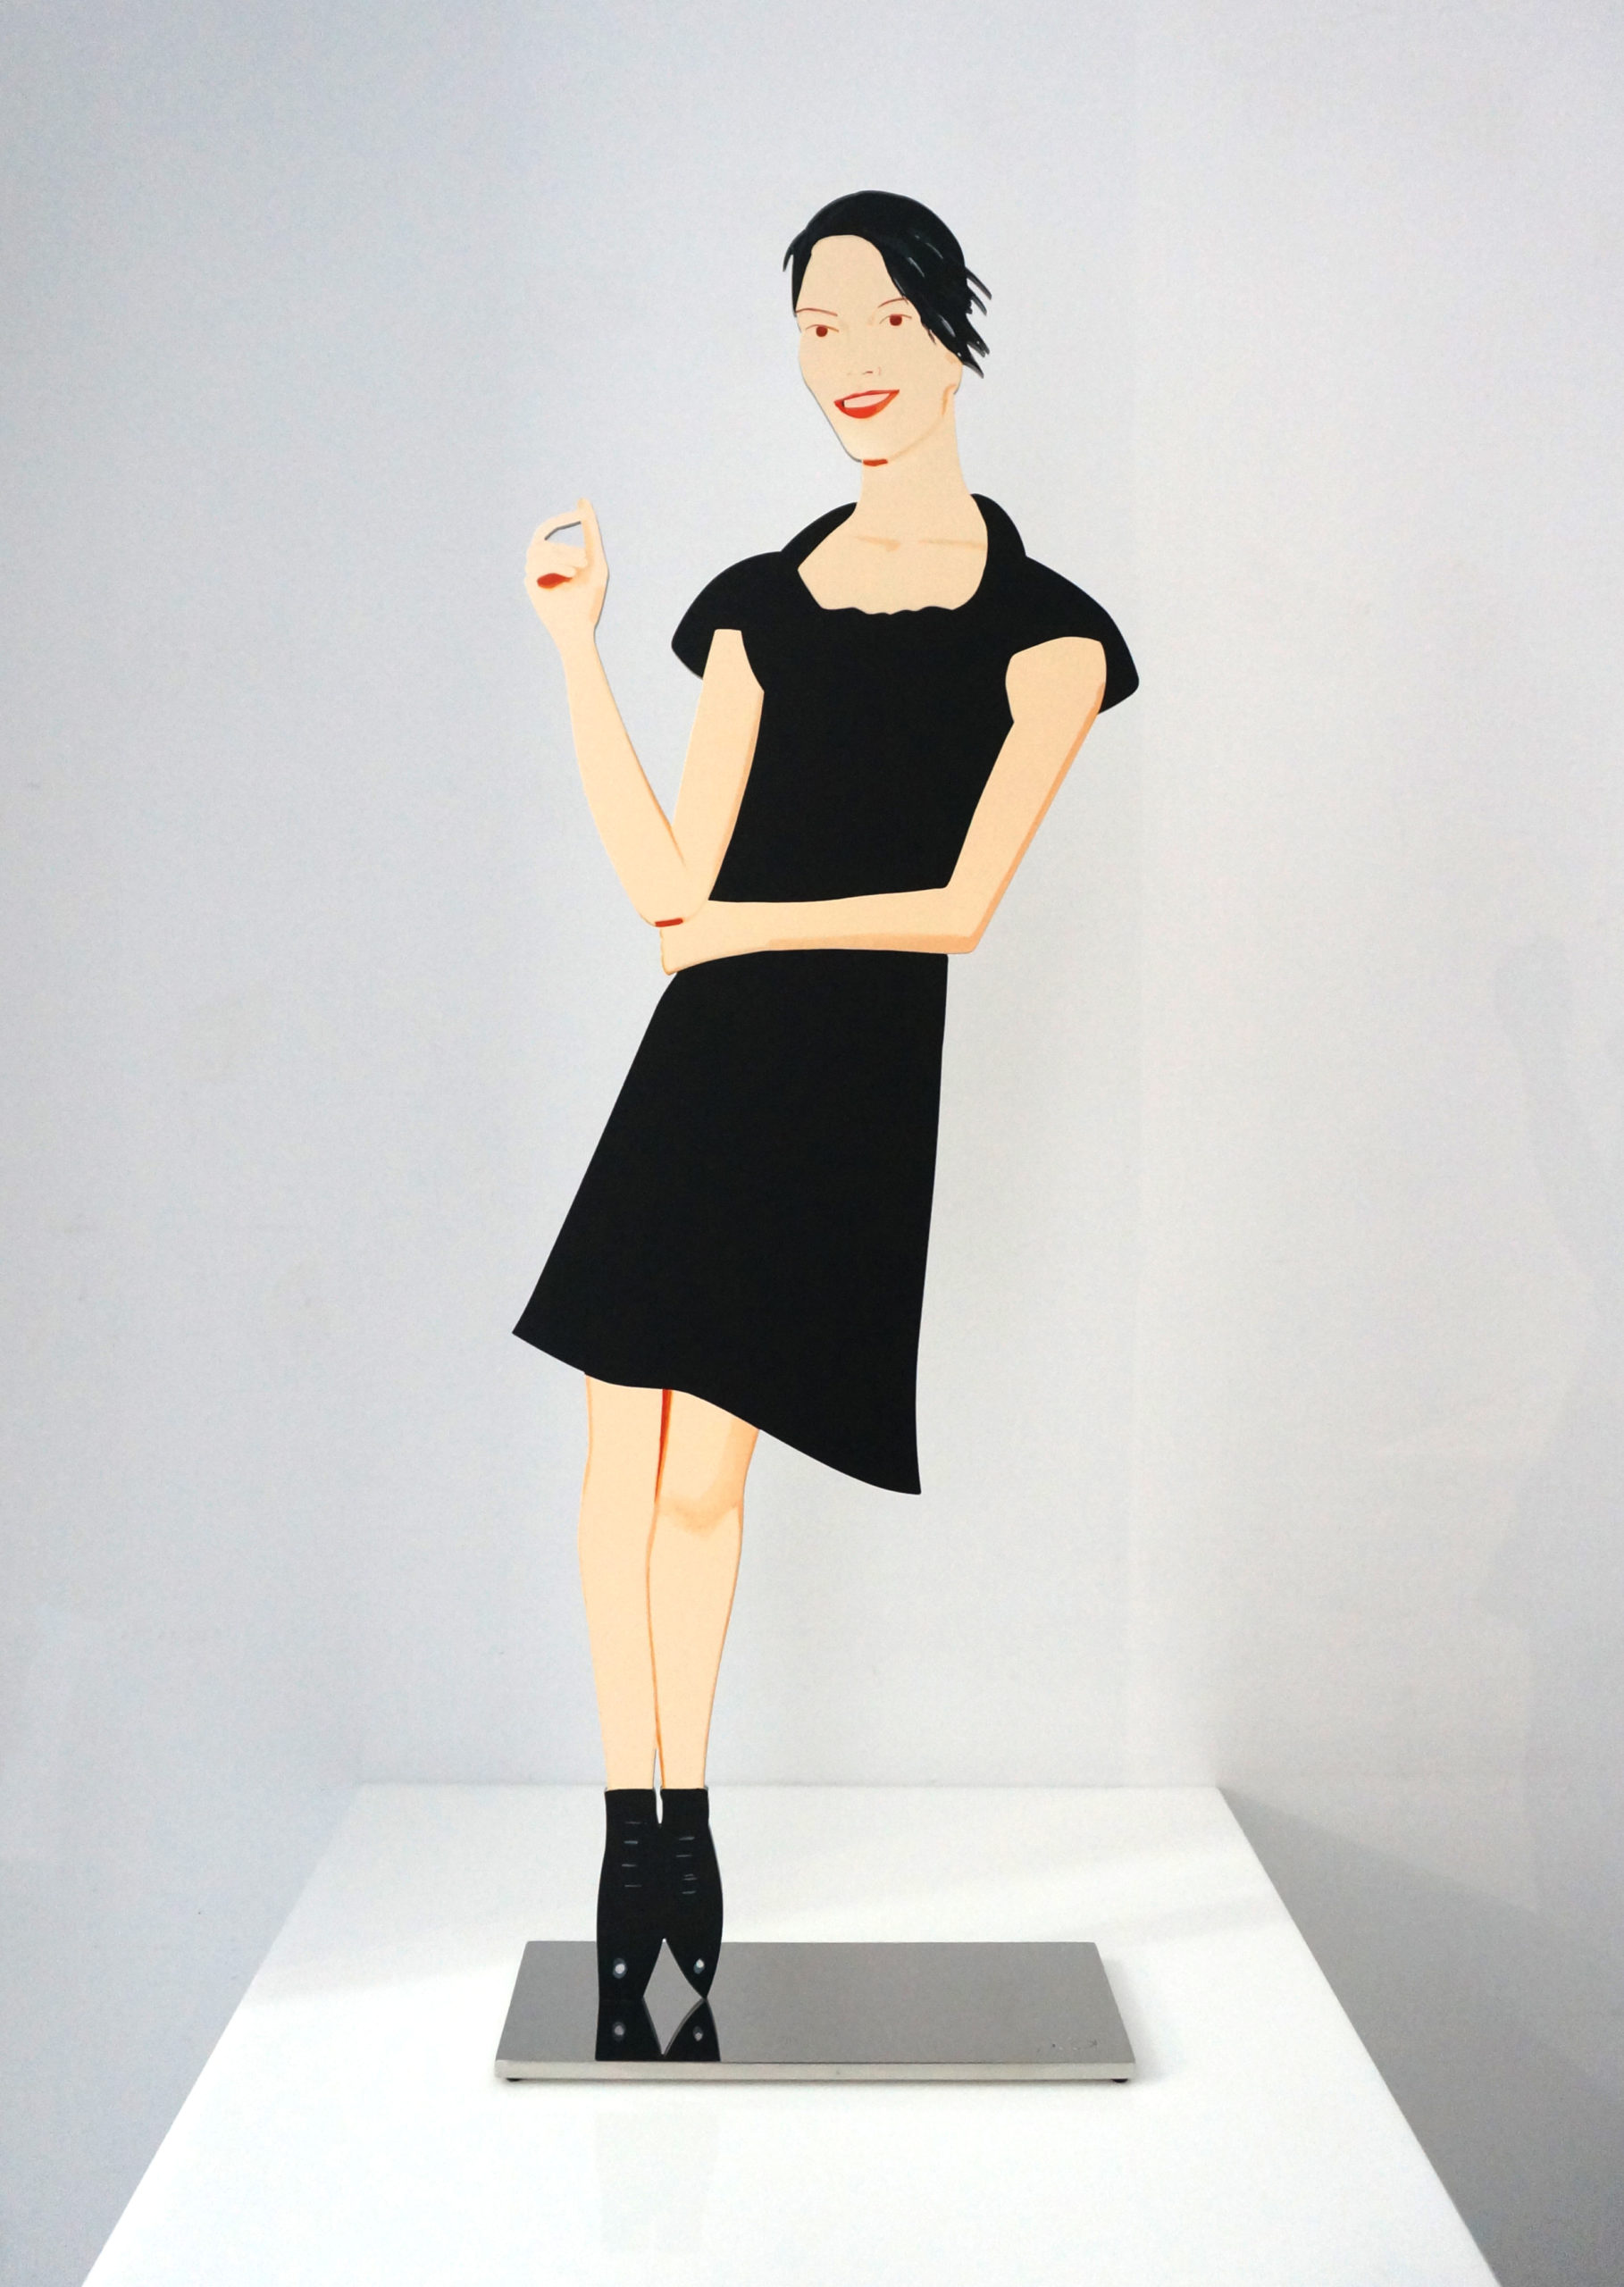 2_德鴻畫廊_Alex Katz-Black Dress(Carmen) (1)鋁、抗UV無酸墨水、保護用透明漆、不鏽鋼台座 Shaped powder-coated aluminum, UV cured archival inks, Clear coated, Stainless steel base_